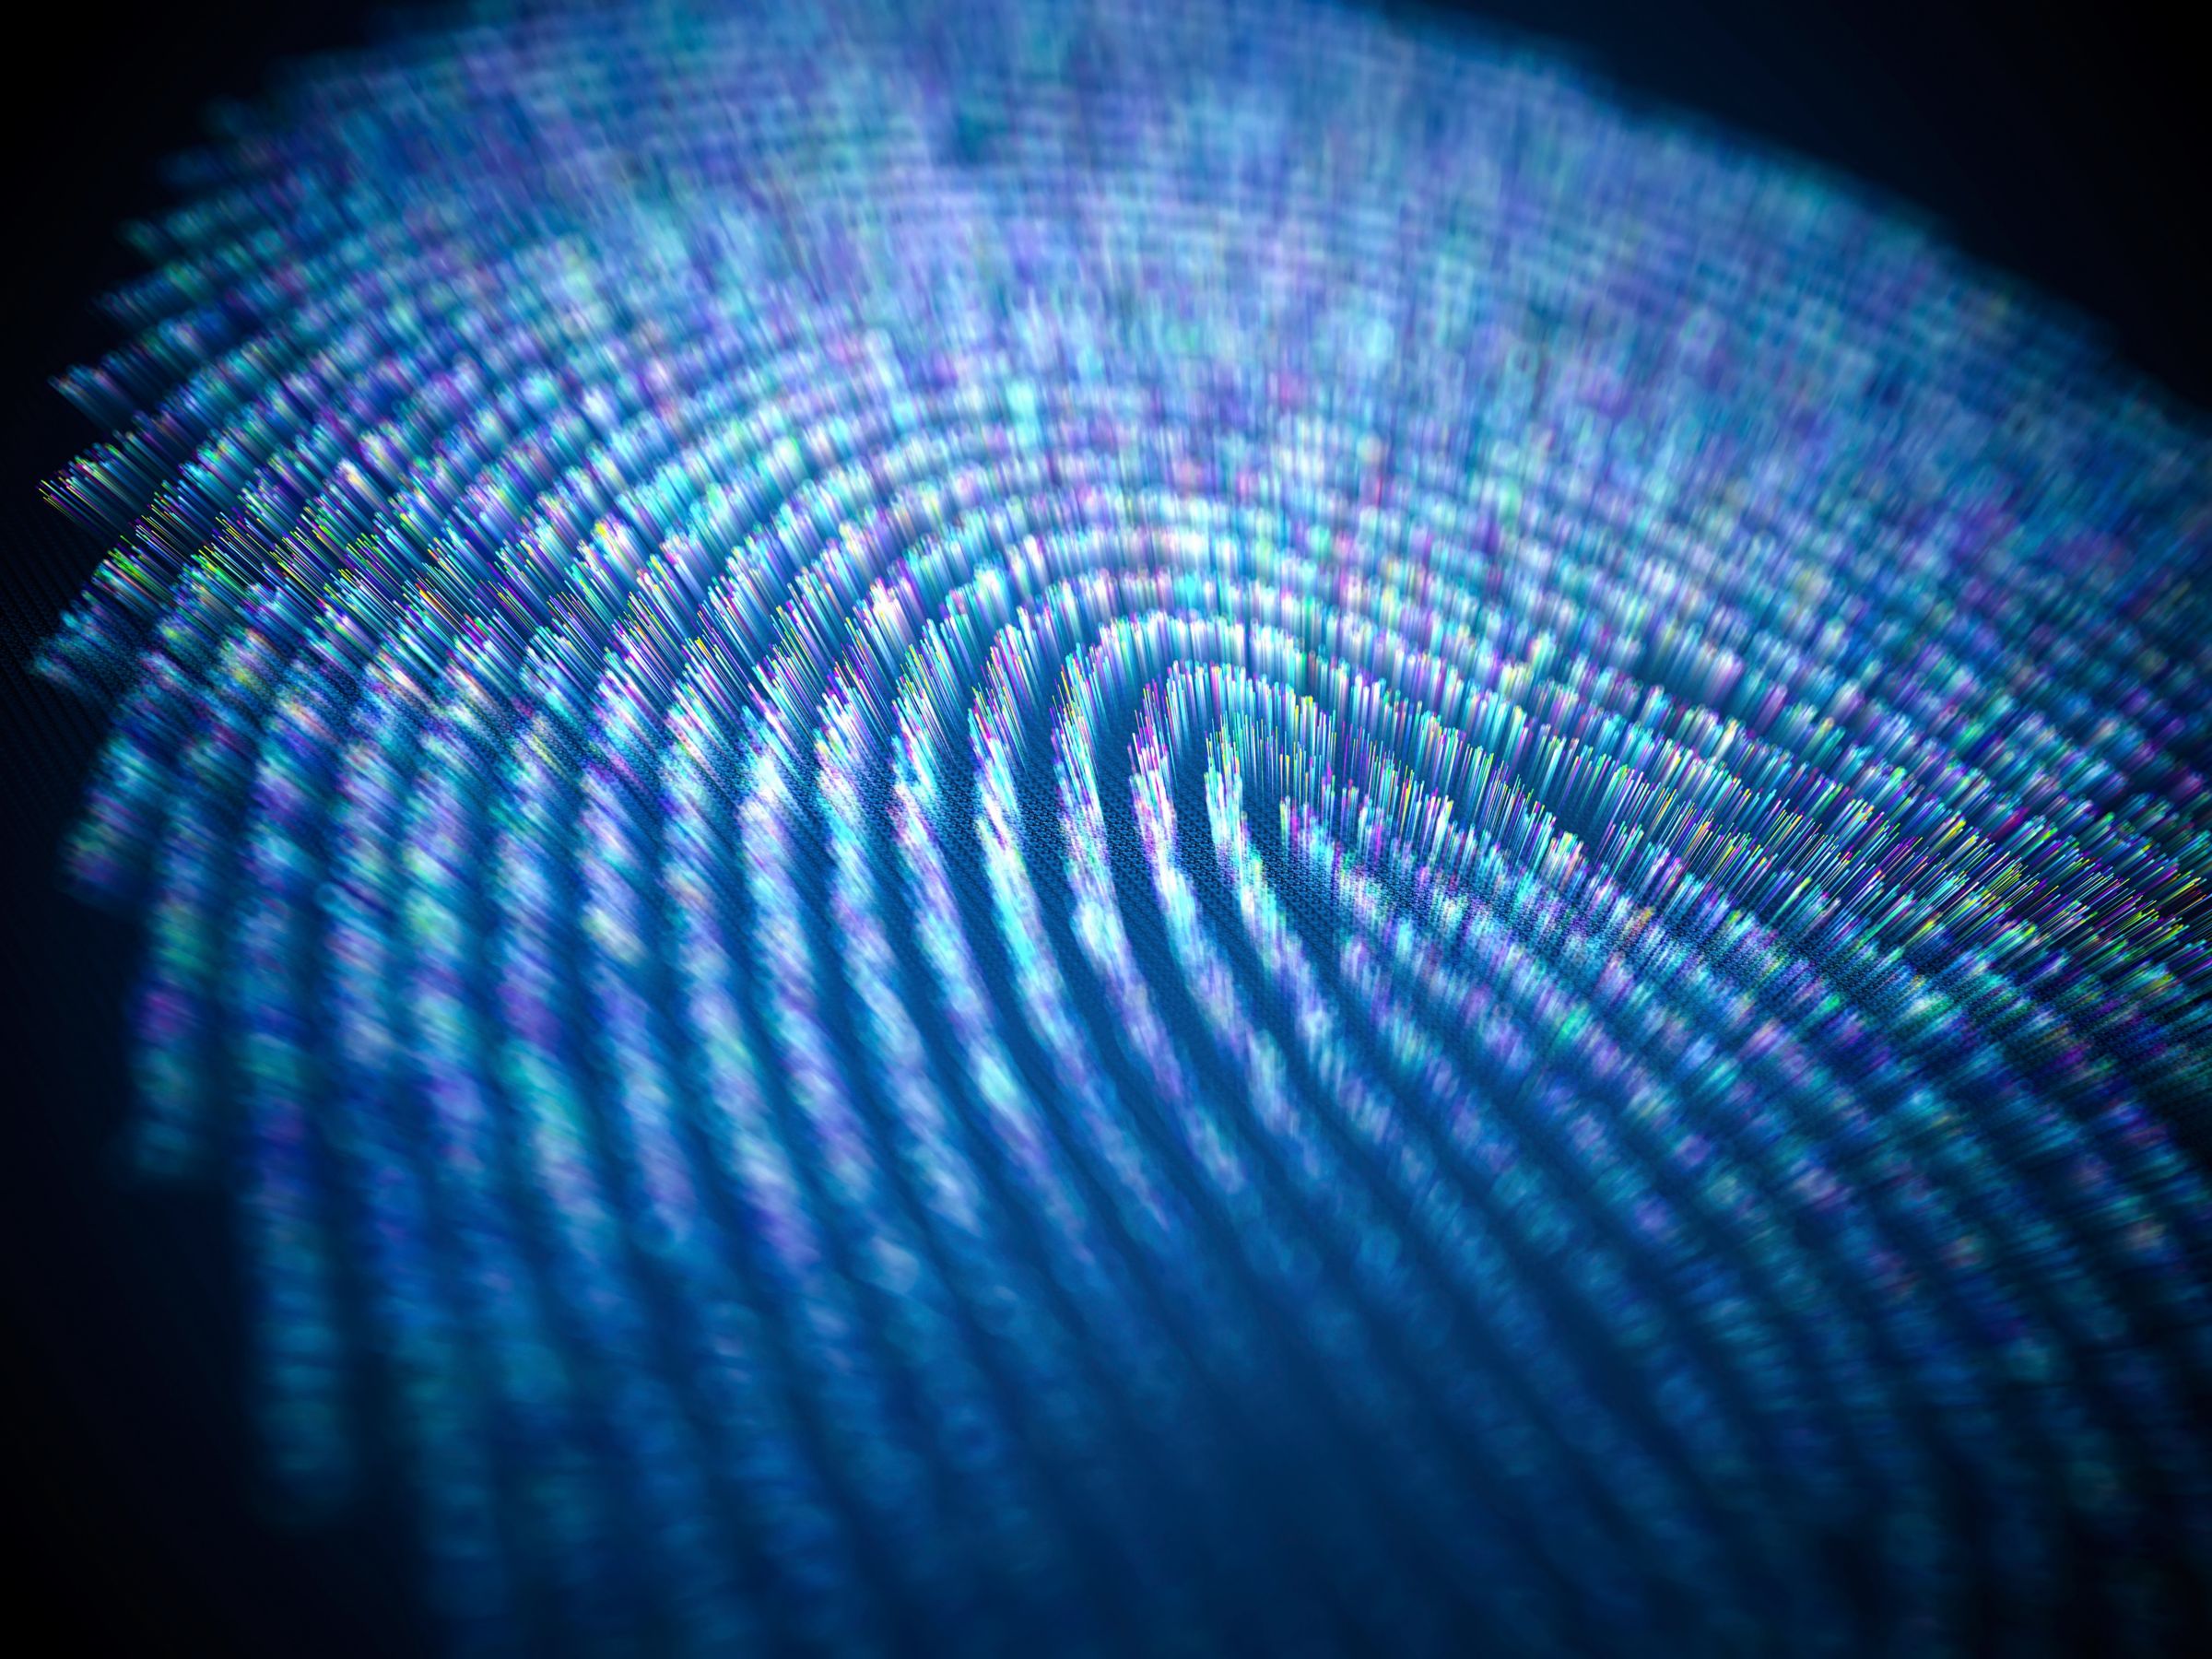 Abstract image of fingerprint